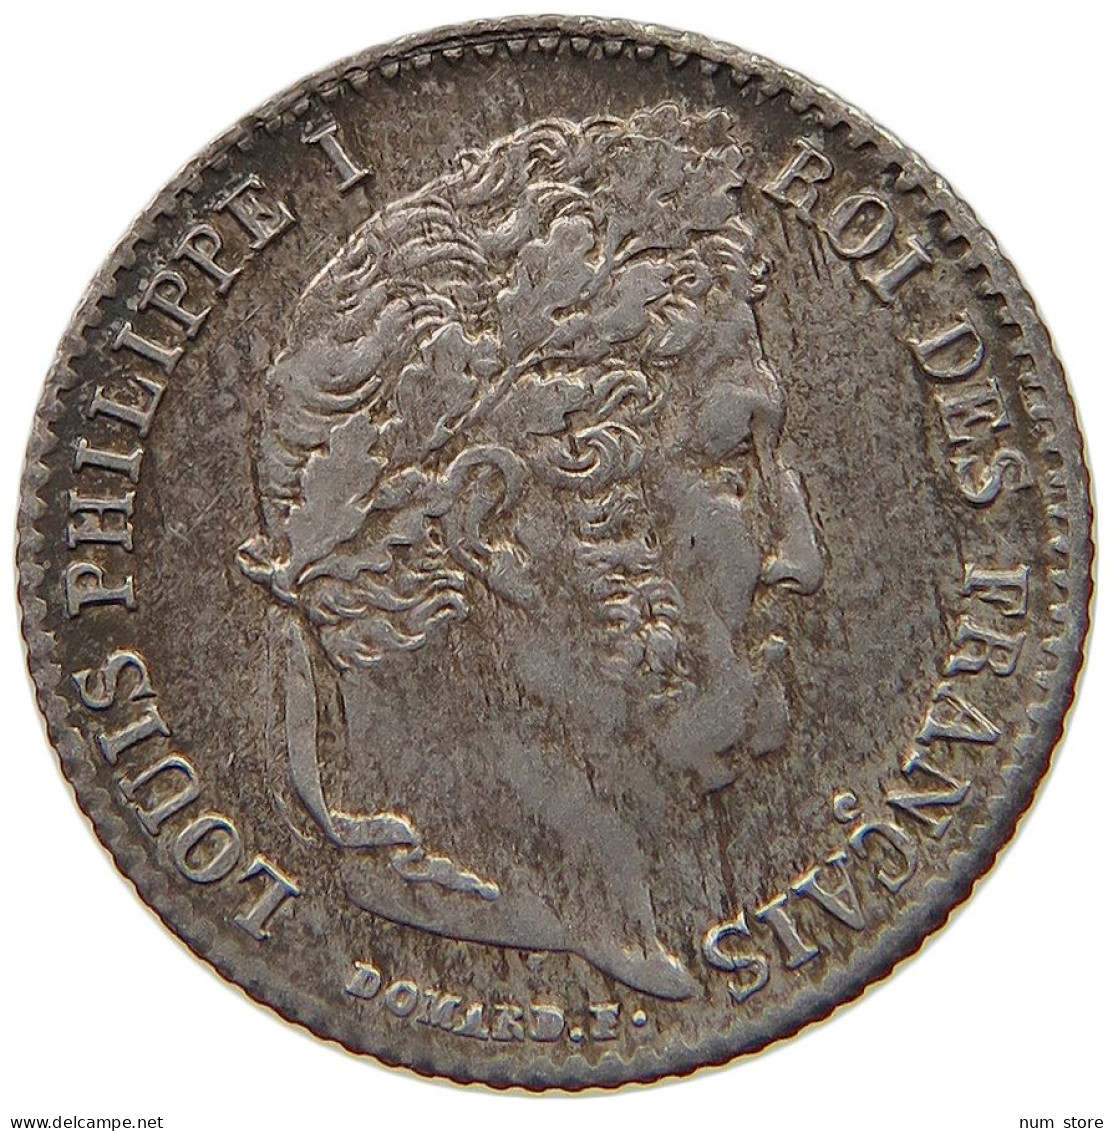 FRANCE 1/4 FRANC 1835 W LILLE LOUIS PHILIPPE I. (1830-1848) #t058 0275 - 1/4 Franc